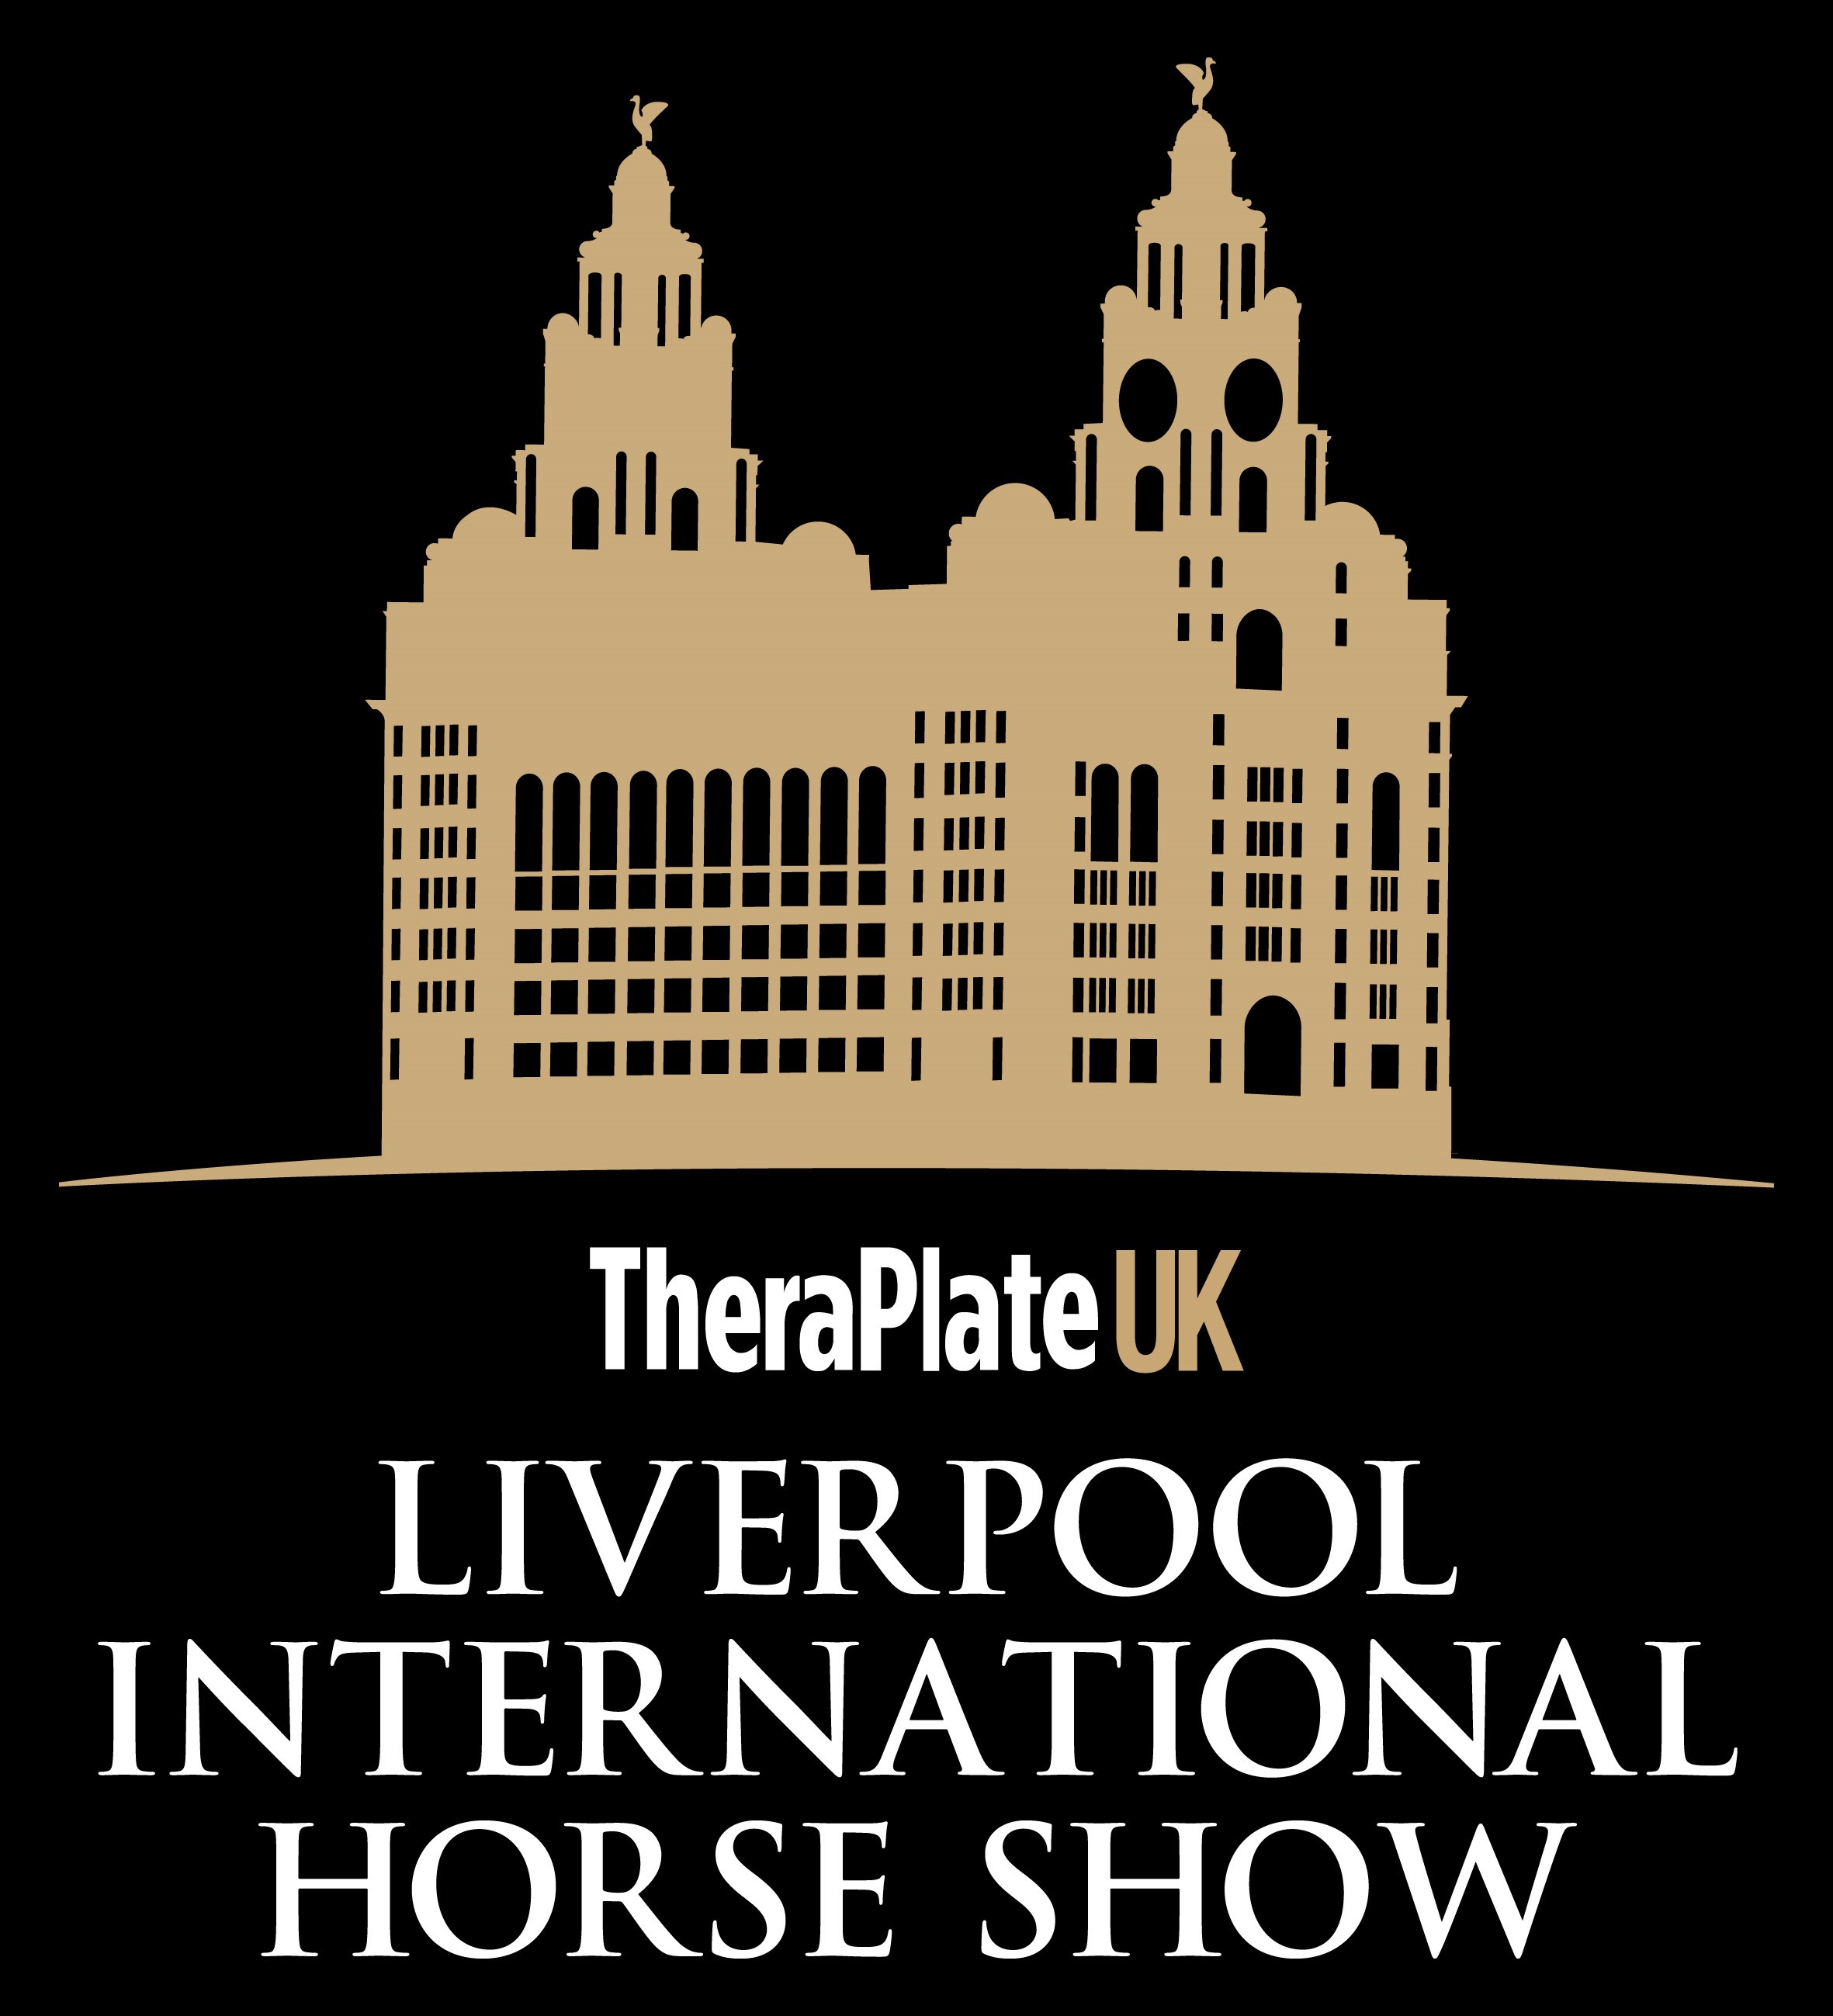 Therapists UK Liverpool International Horse Show